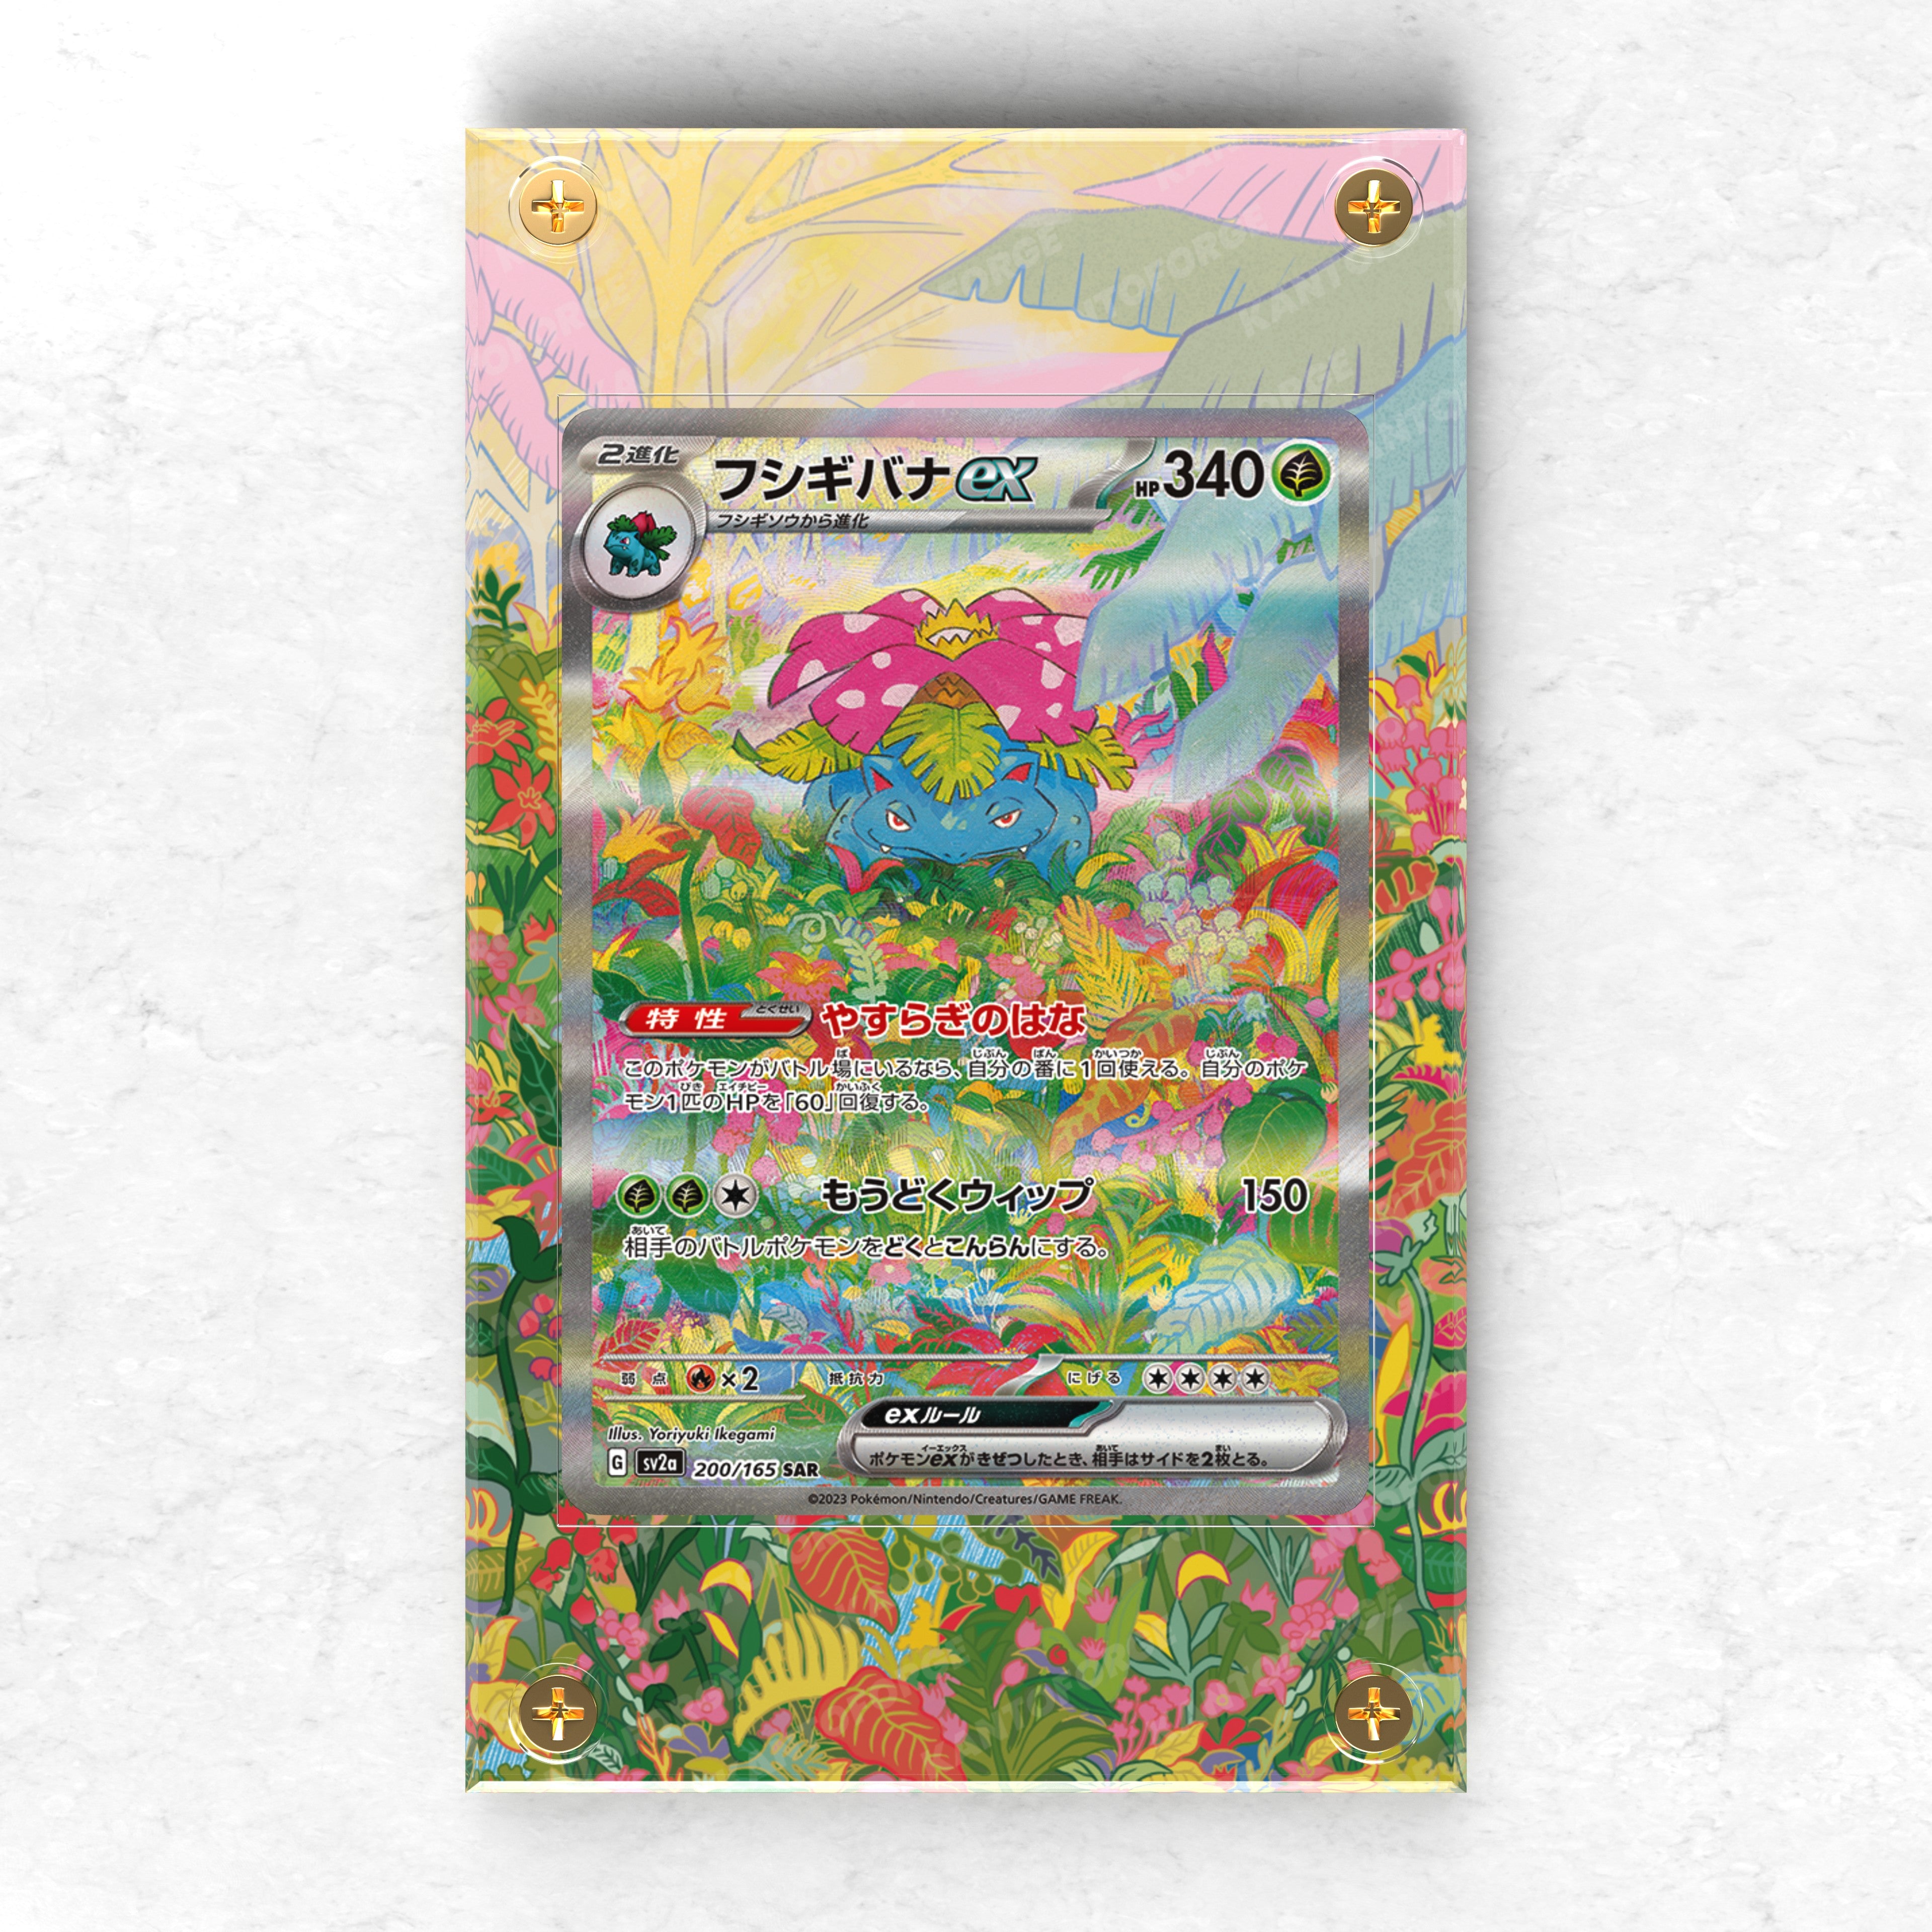 Bulbasaur Evo Line Bundle (Bulbasaur/Ivysaur/Venusaur) - Pokémon Extended Artwork Protective Card Display Case x3